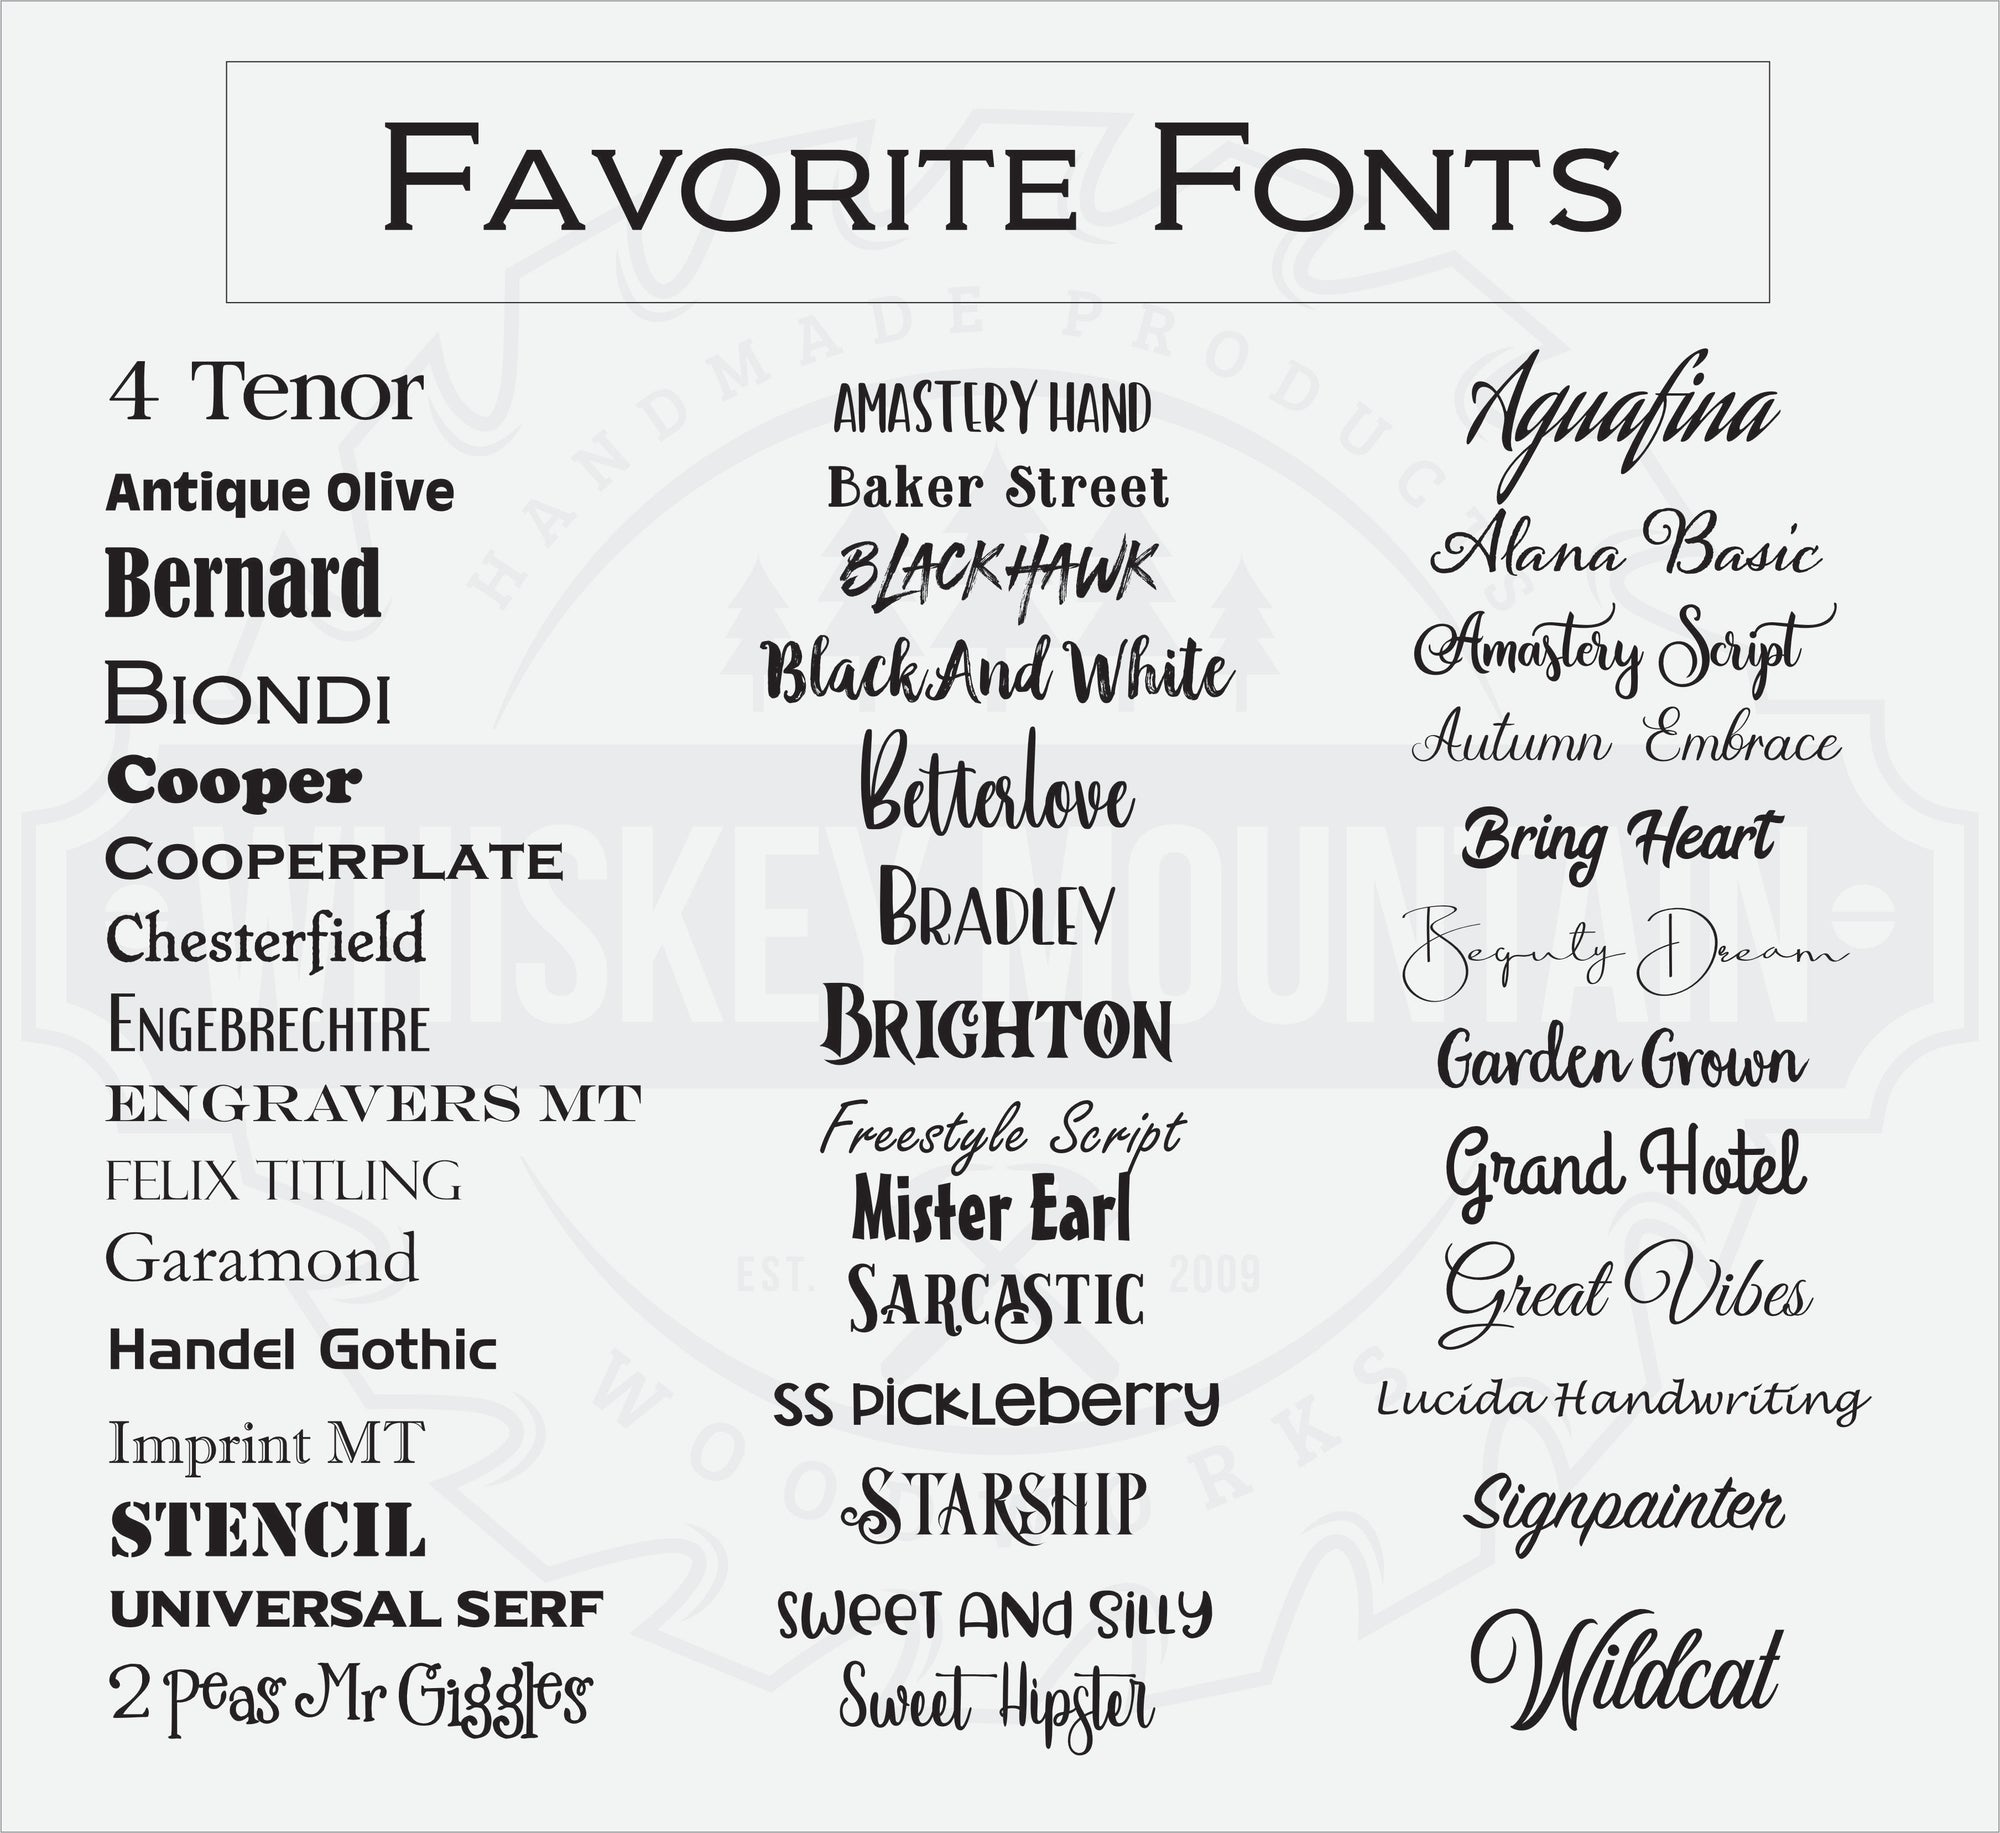 Favorite fonts for custom engraving. 